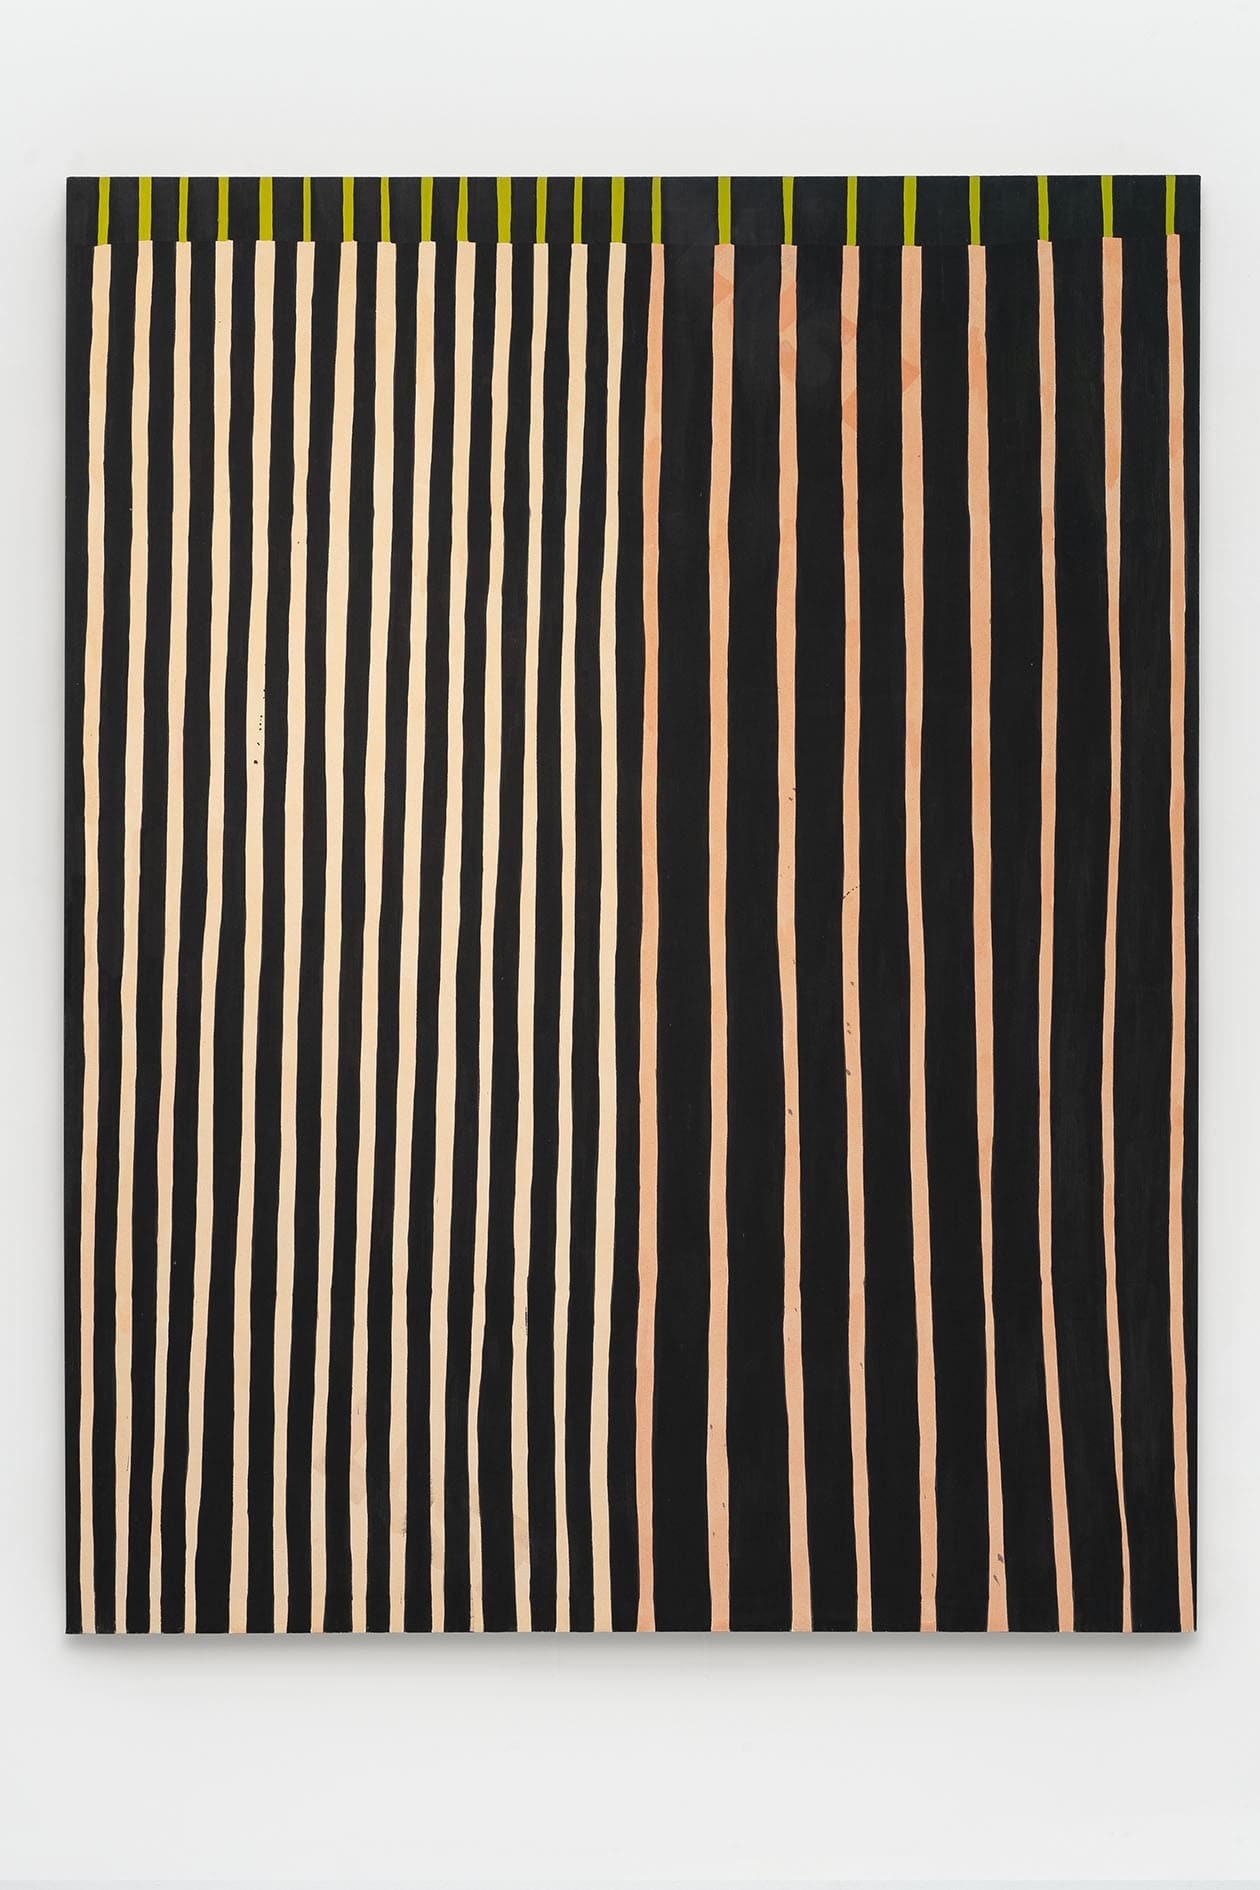 Sophia Domagala, Schwarze Streifen auf orange, 2021, acrylic on canvas, 171 x 136 x 3 cm